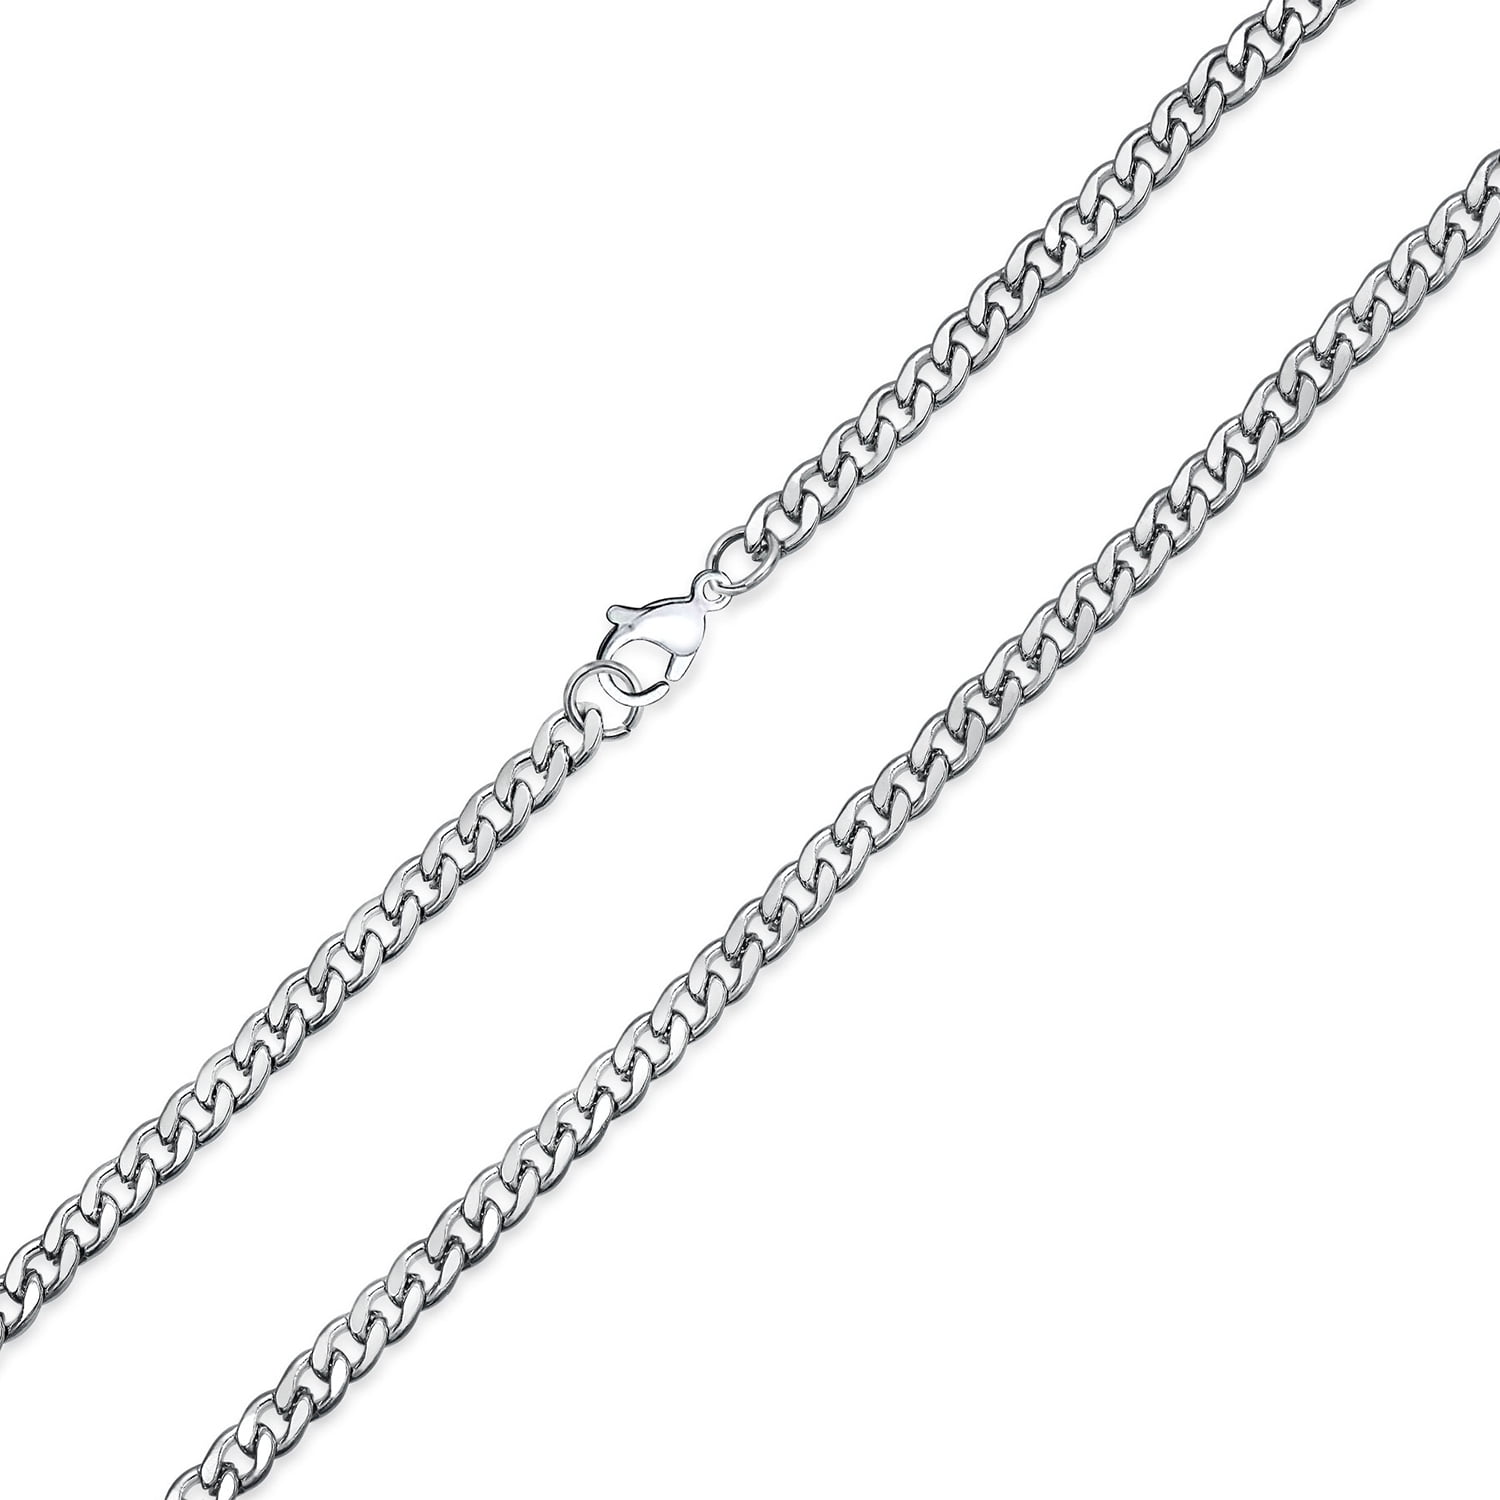 30"MEN's Stainless Steel 4mm Black Silver Box Link Chain Necklace Bracelet SETS 